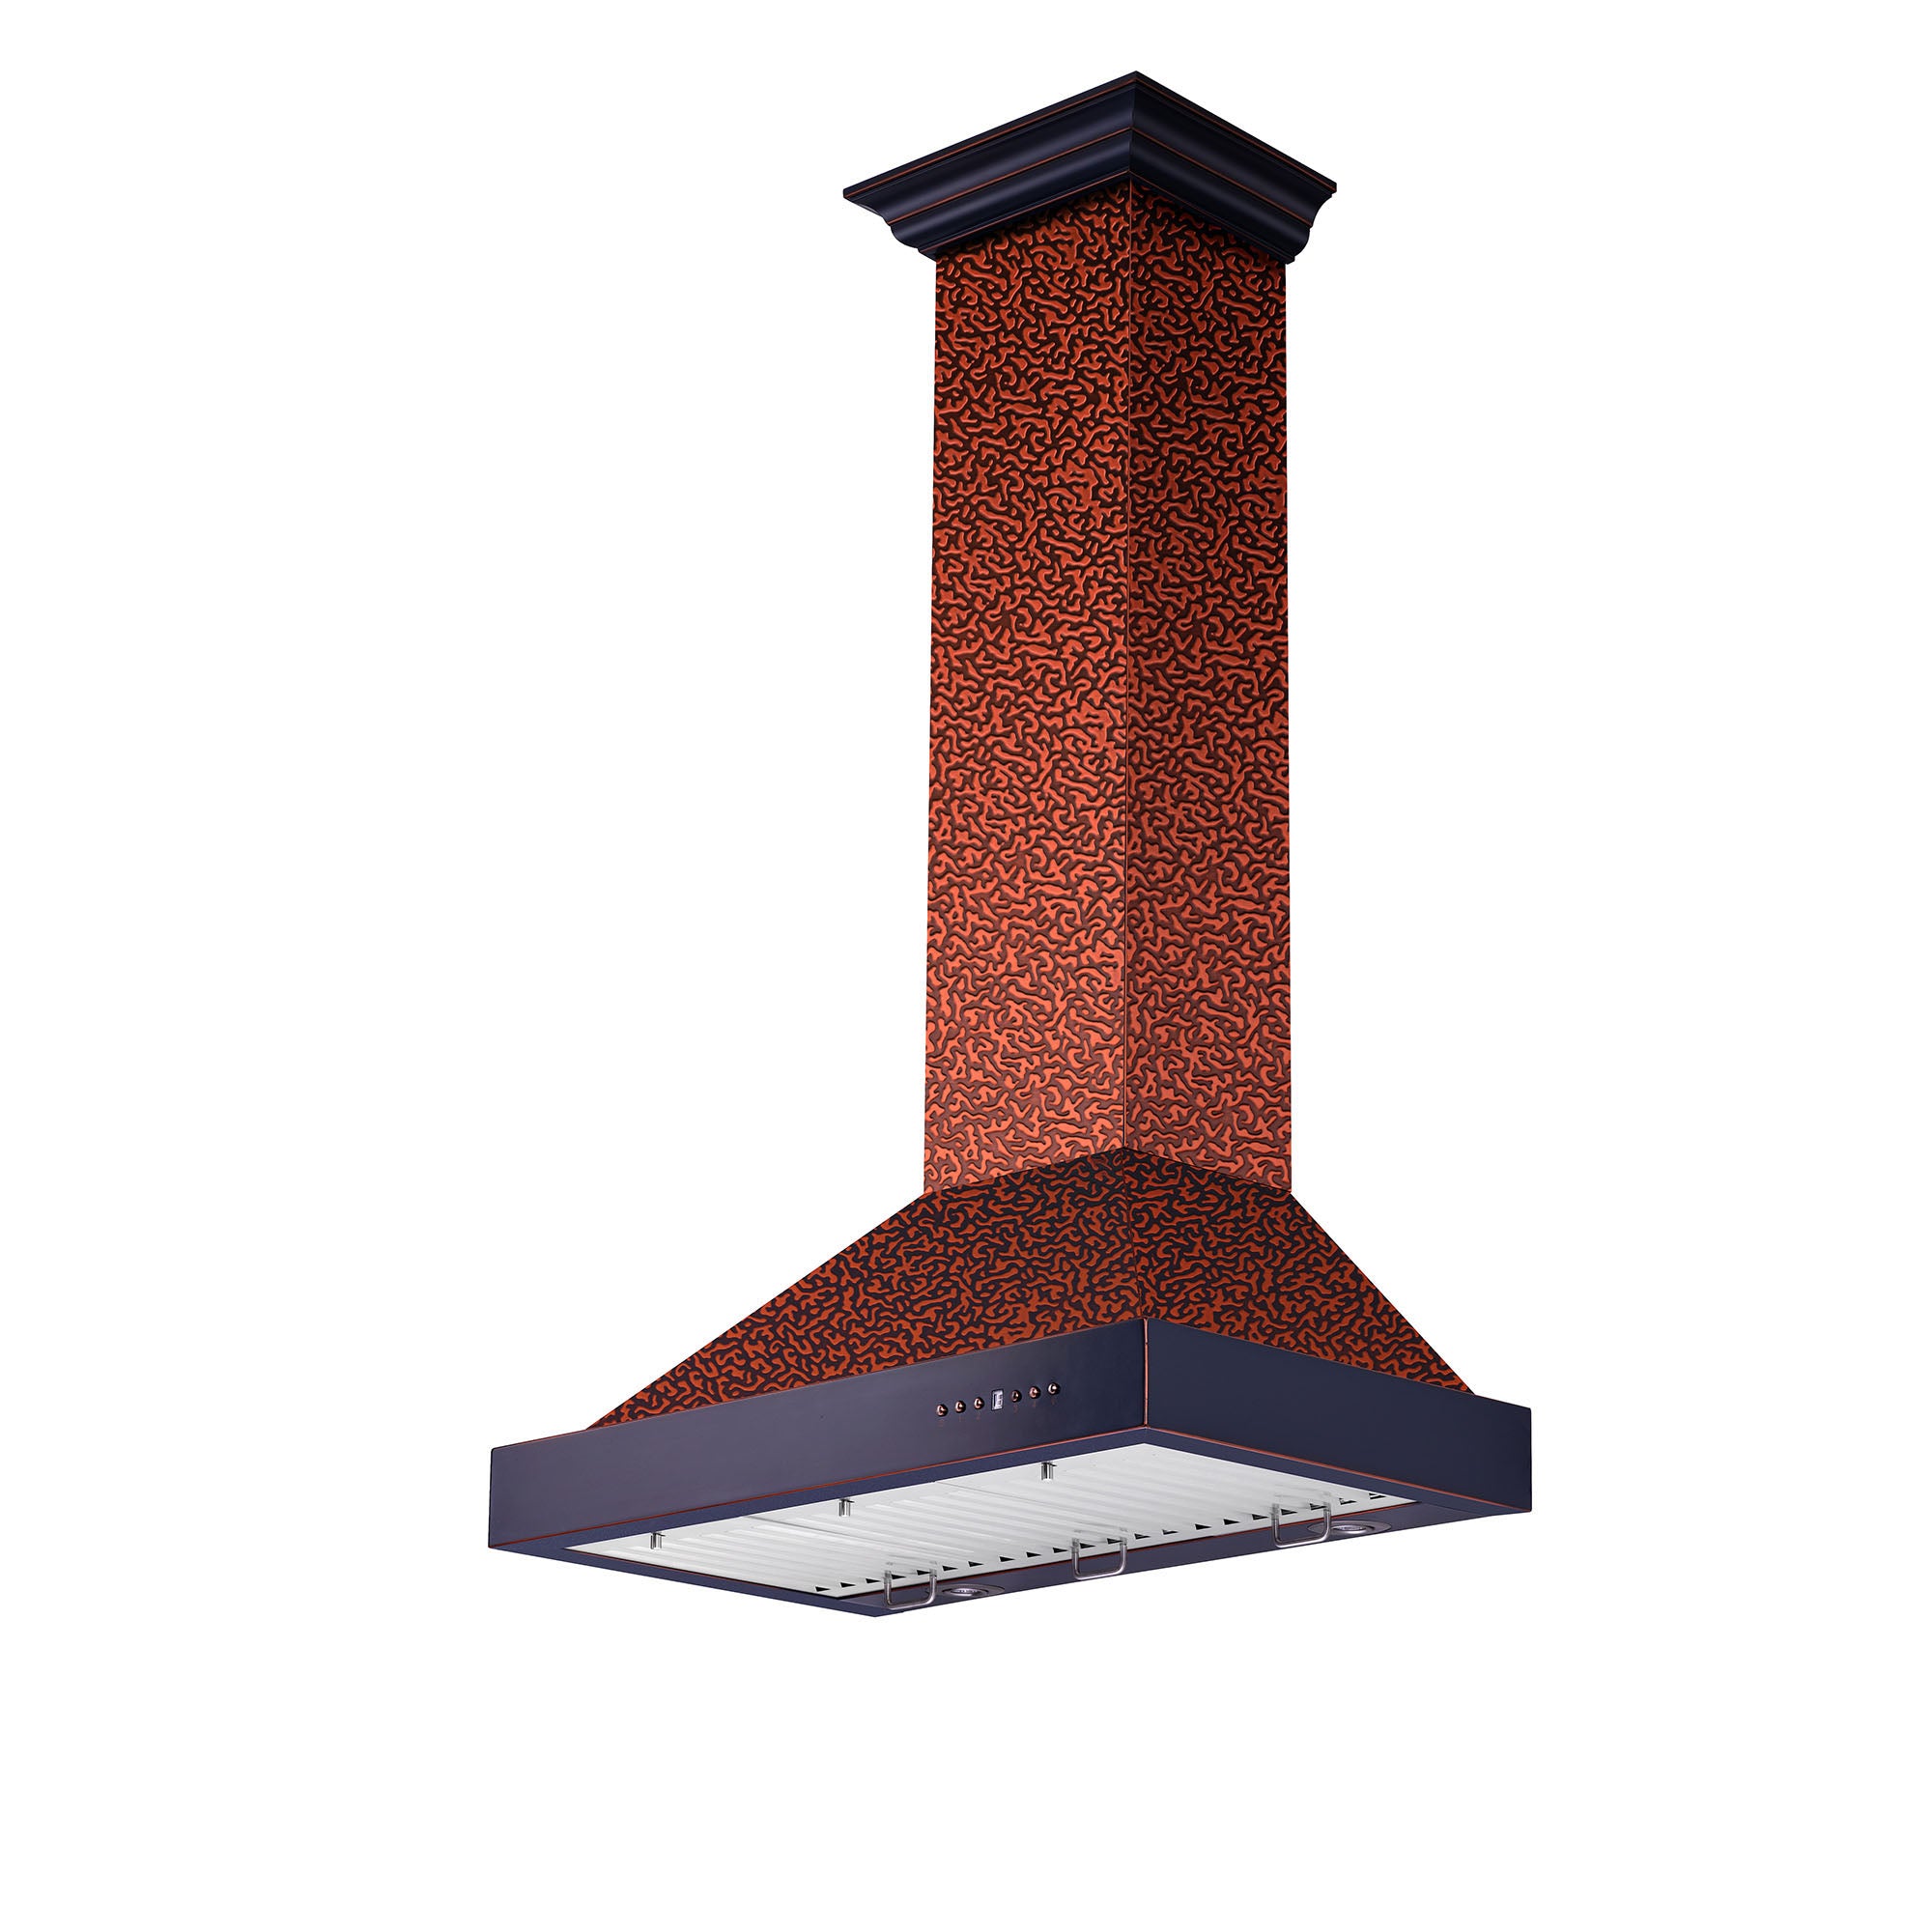 ZLINE Designer Series Wall Mount Range Hood in Embossed Copper with Size Options (KB2-EBXXX) 48 inch side, under.